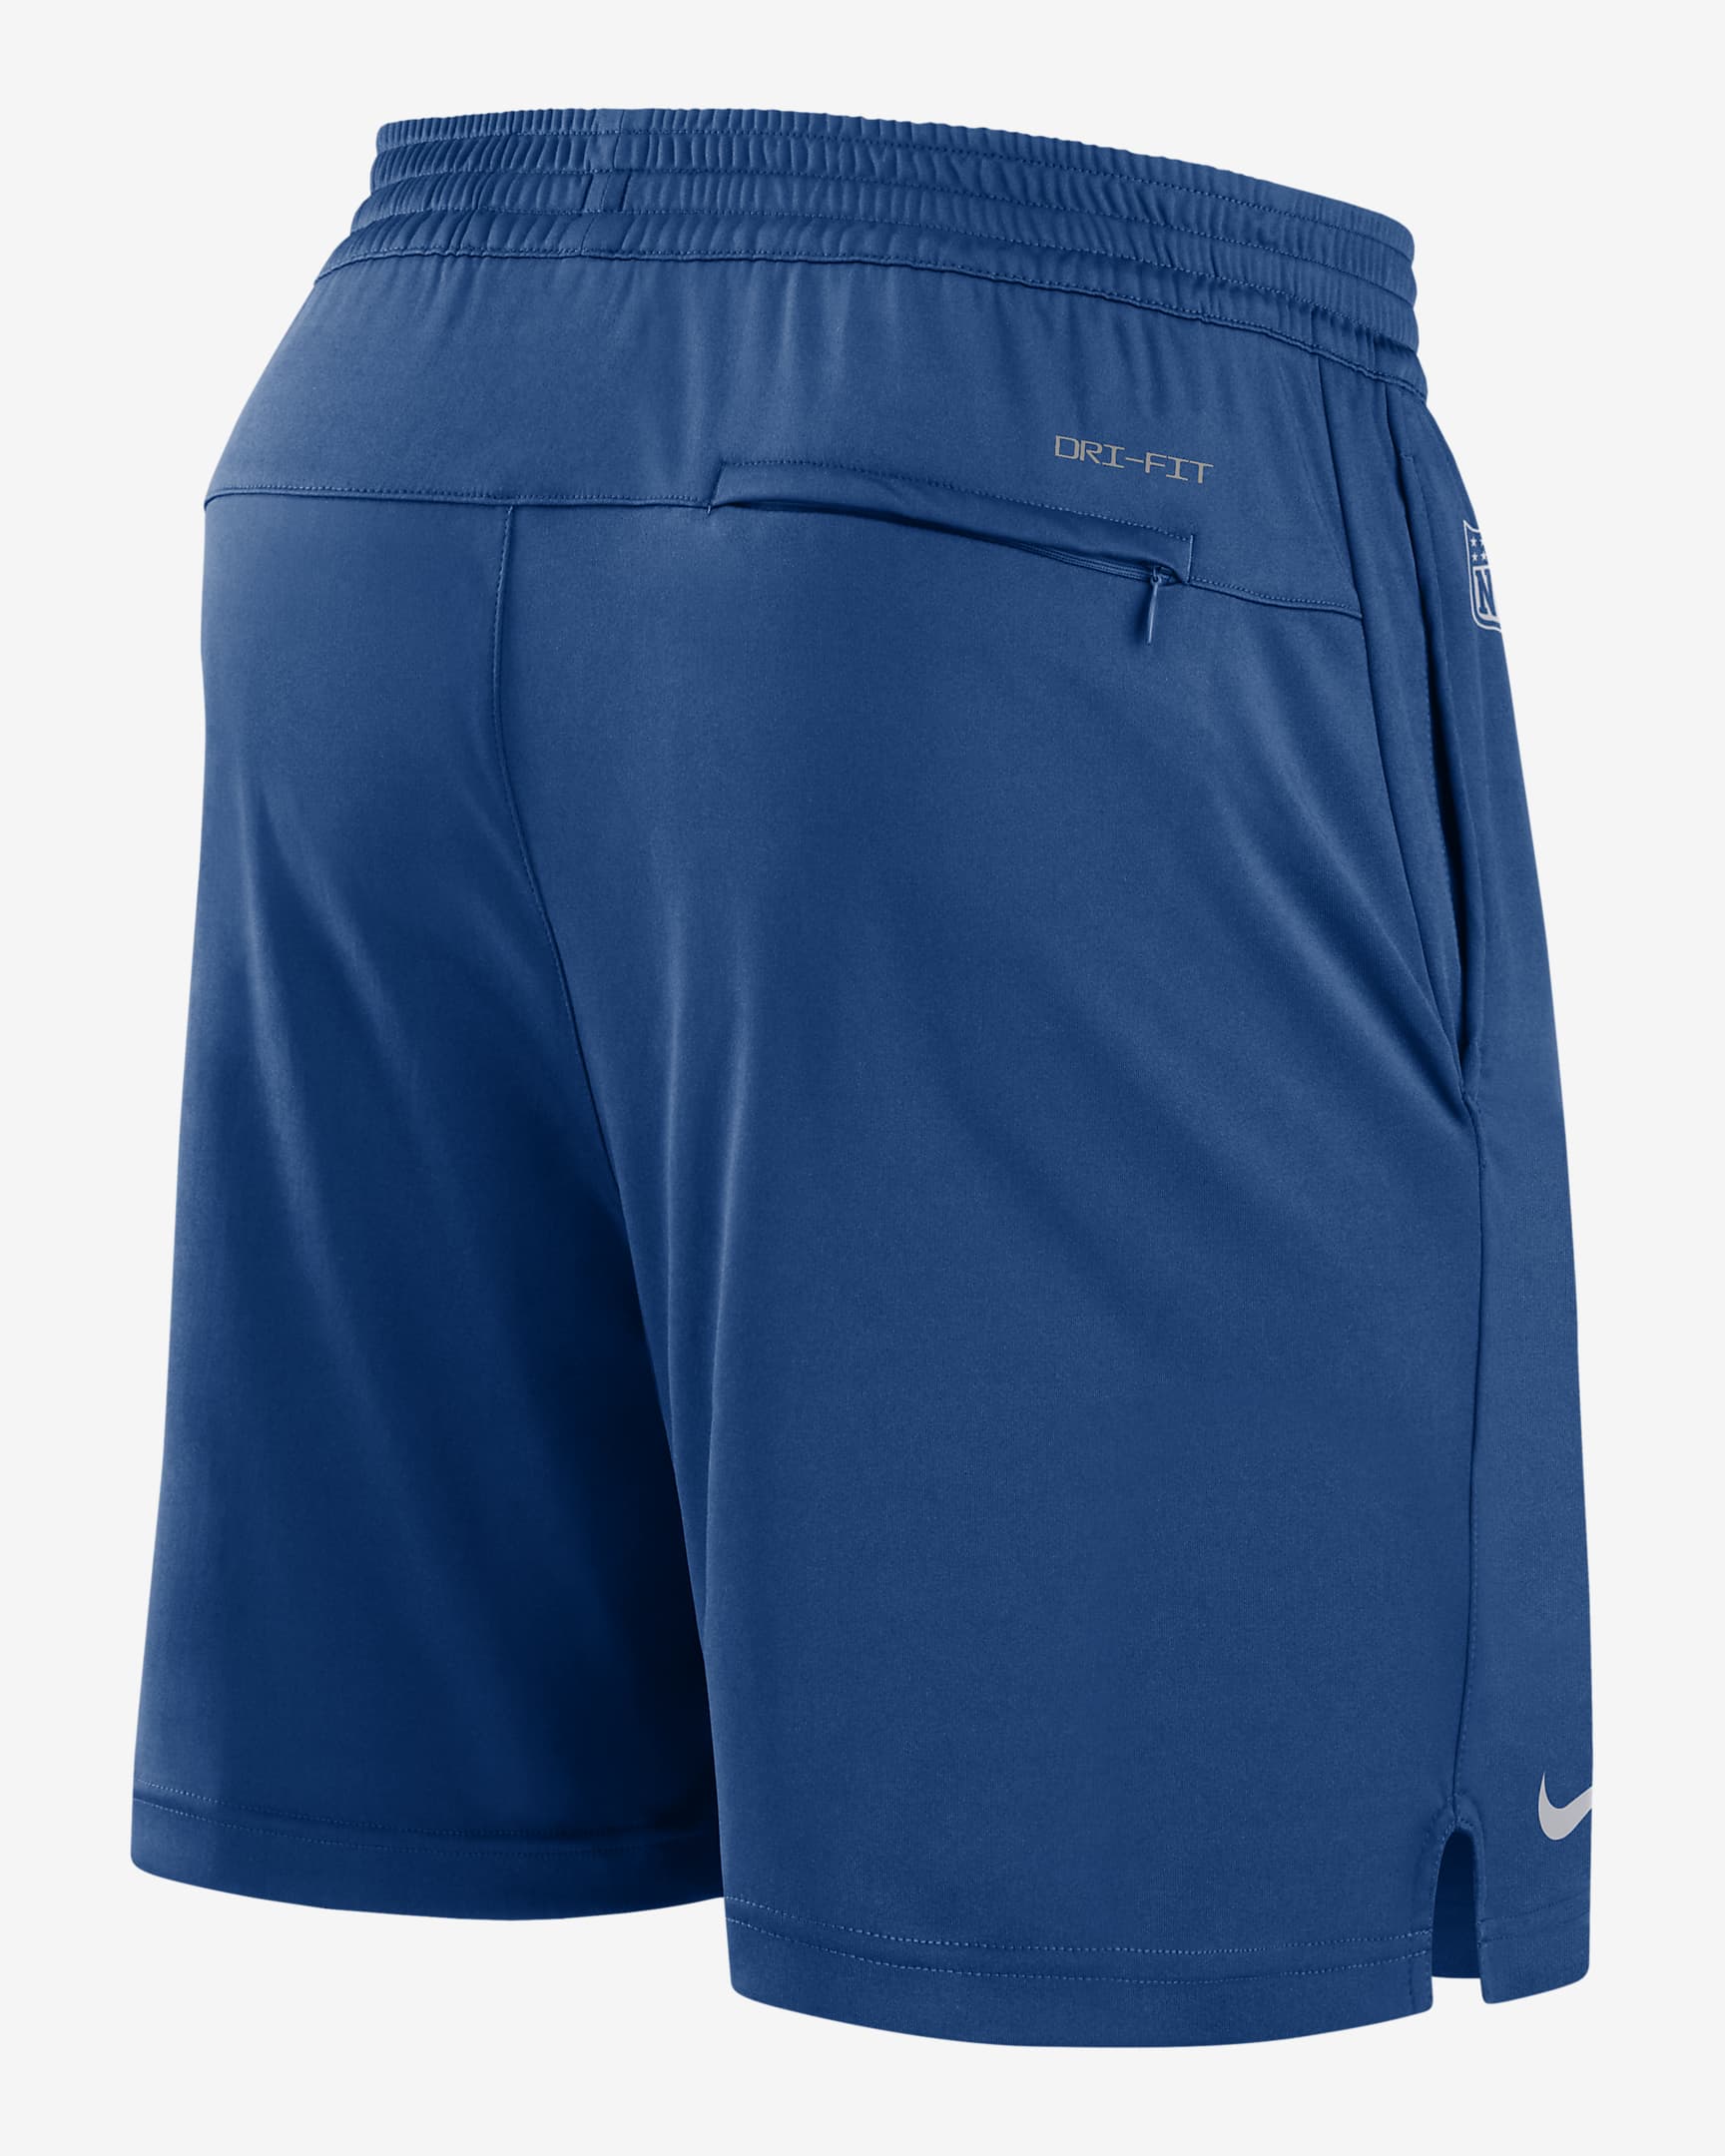 Shorts para hombre Nike Dri-FIT Sideline (NFL Indianapolis Colts). Nike.com